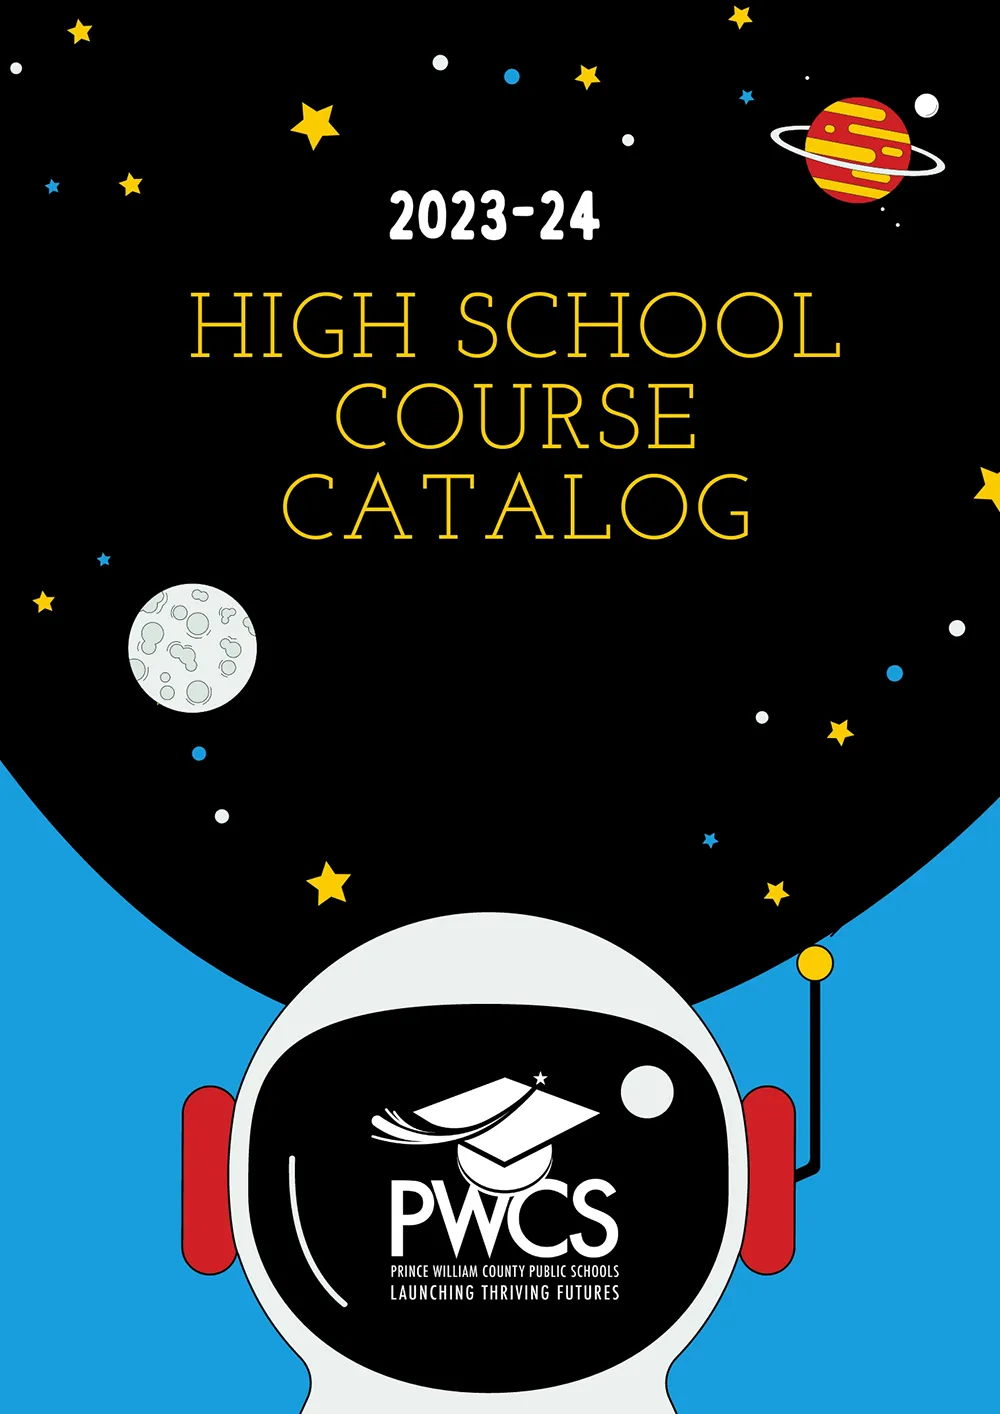 2023-24 High School Course Catalog cover